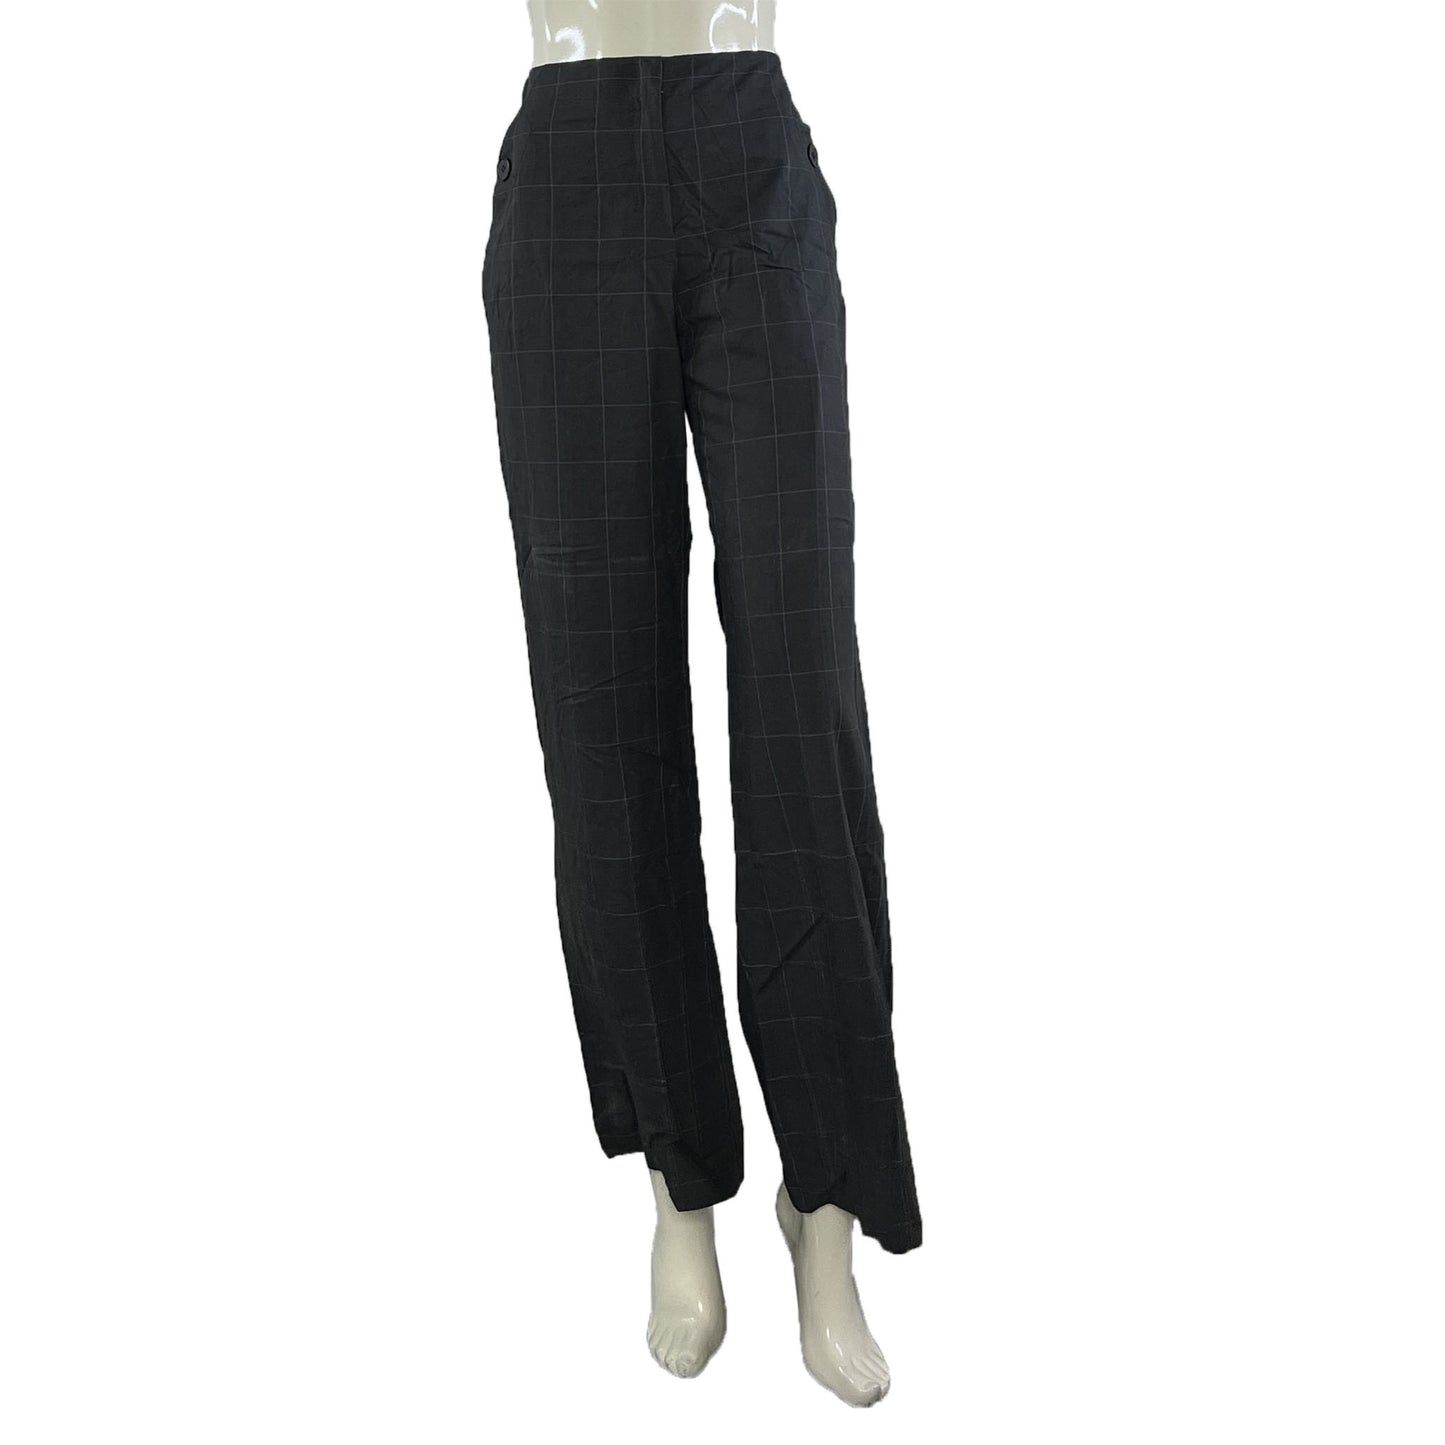 Talbots Dress Pants  Square Pin Stripe Gray Size 8 SKU 000416